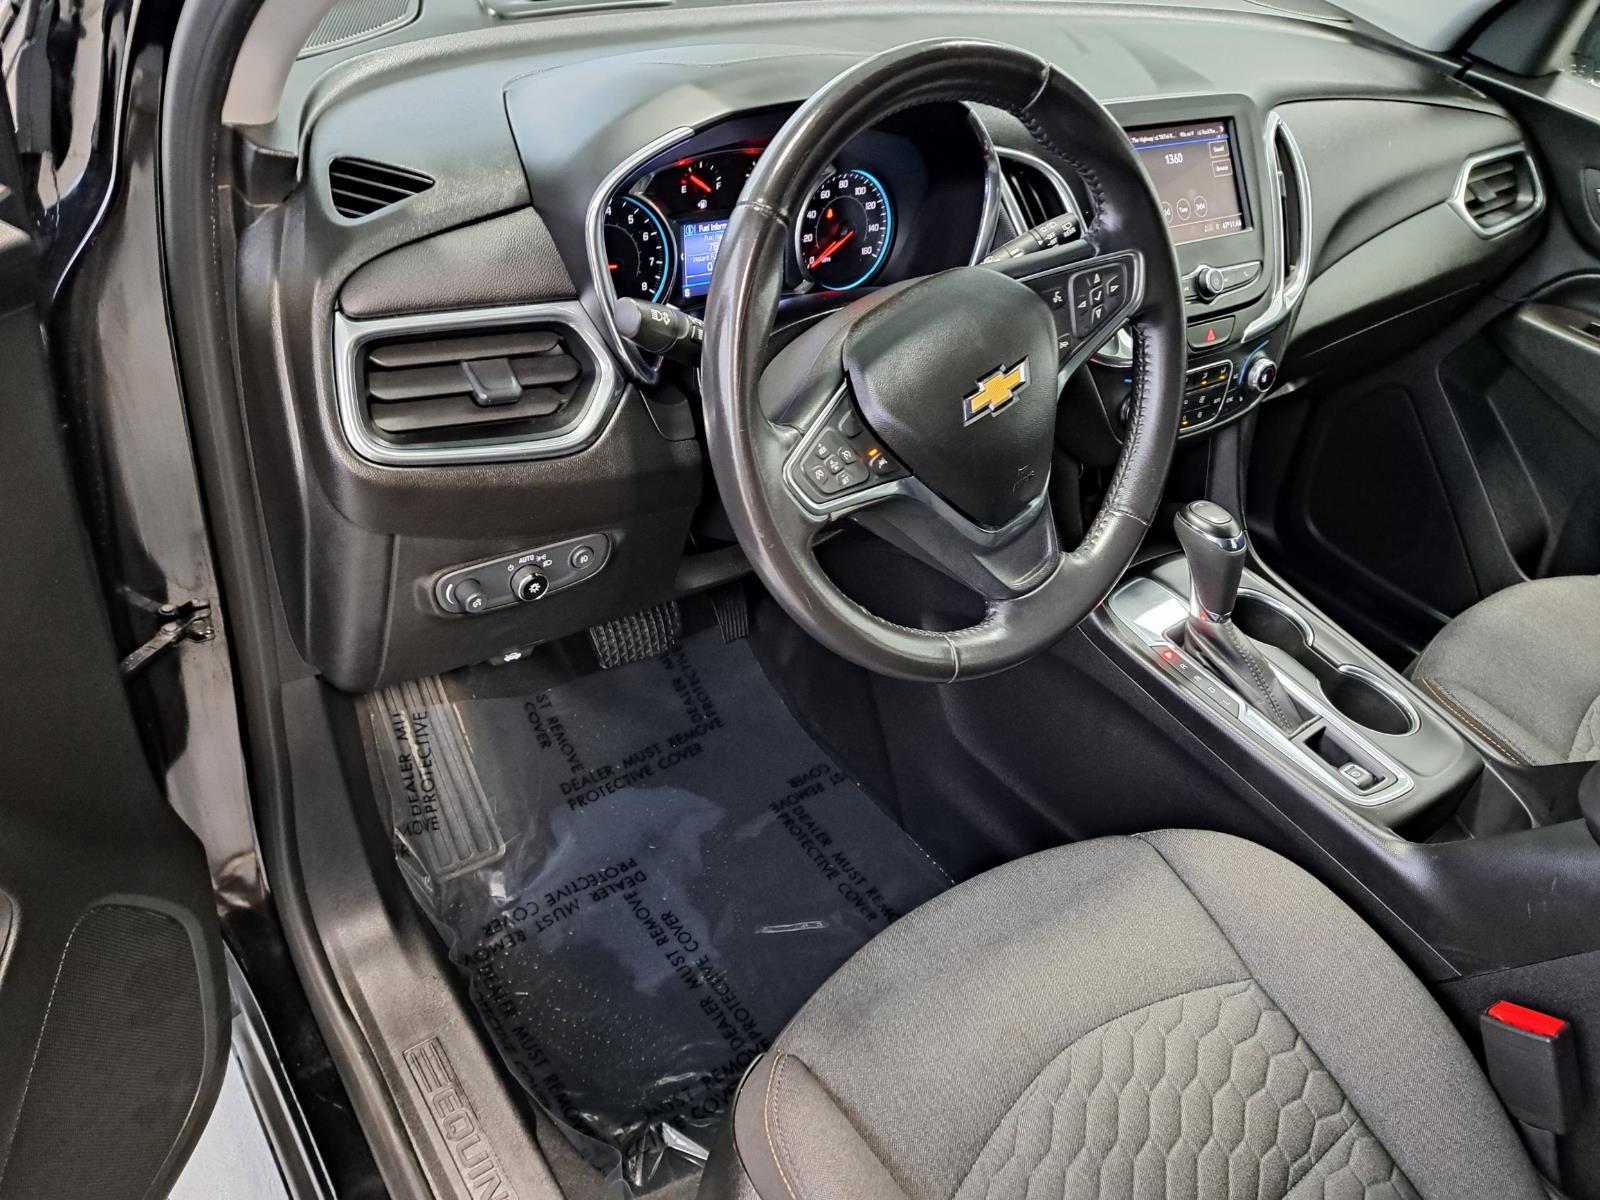 2020 Chevrolet Equinox LT SUV Front Wheel Drive 4